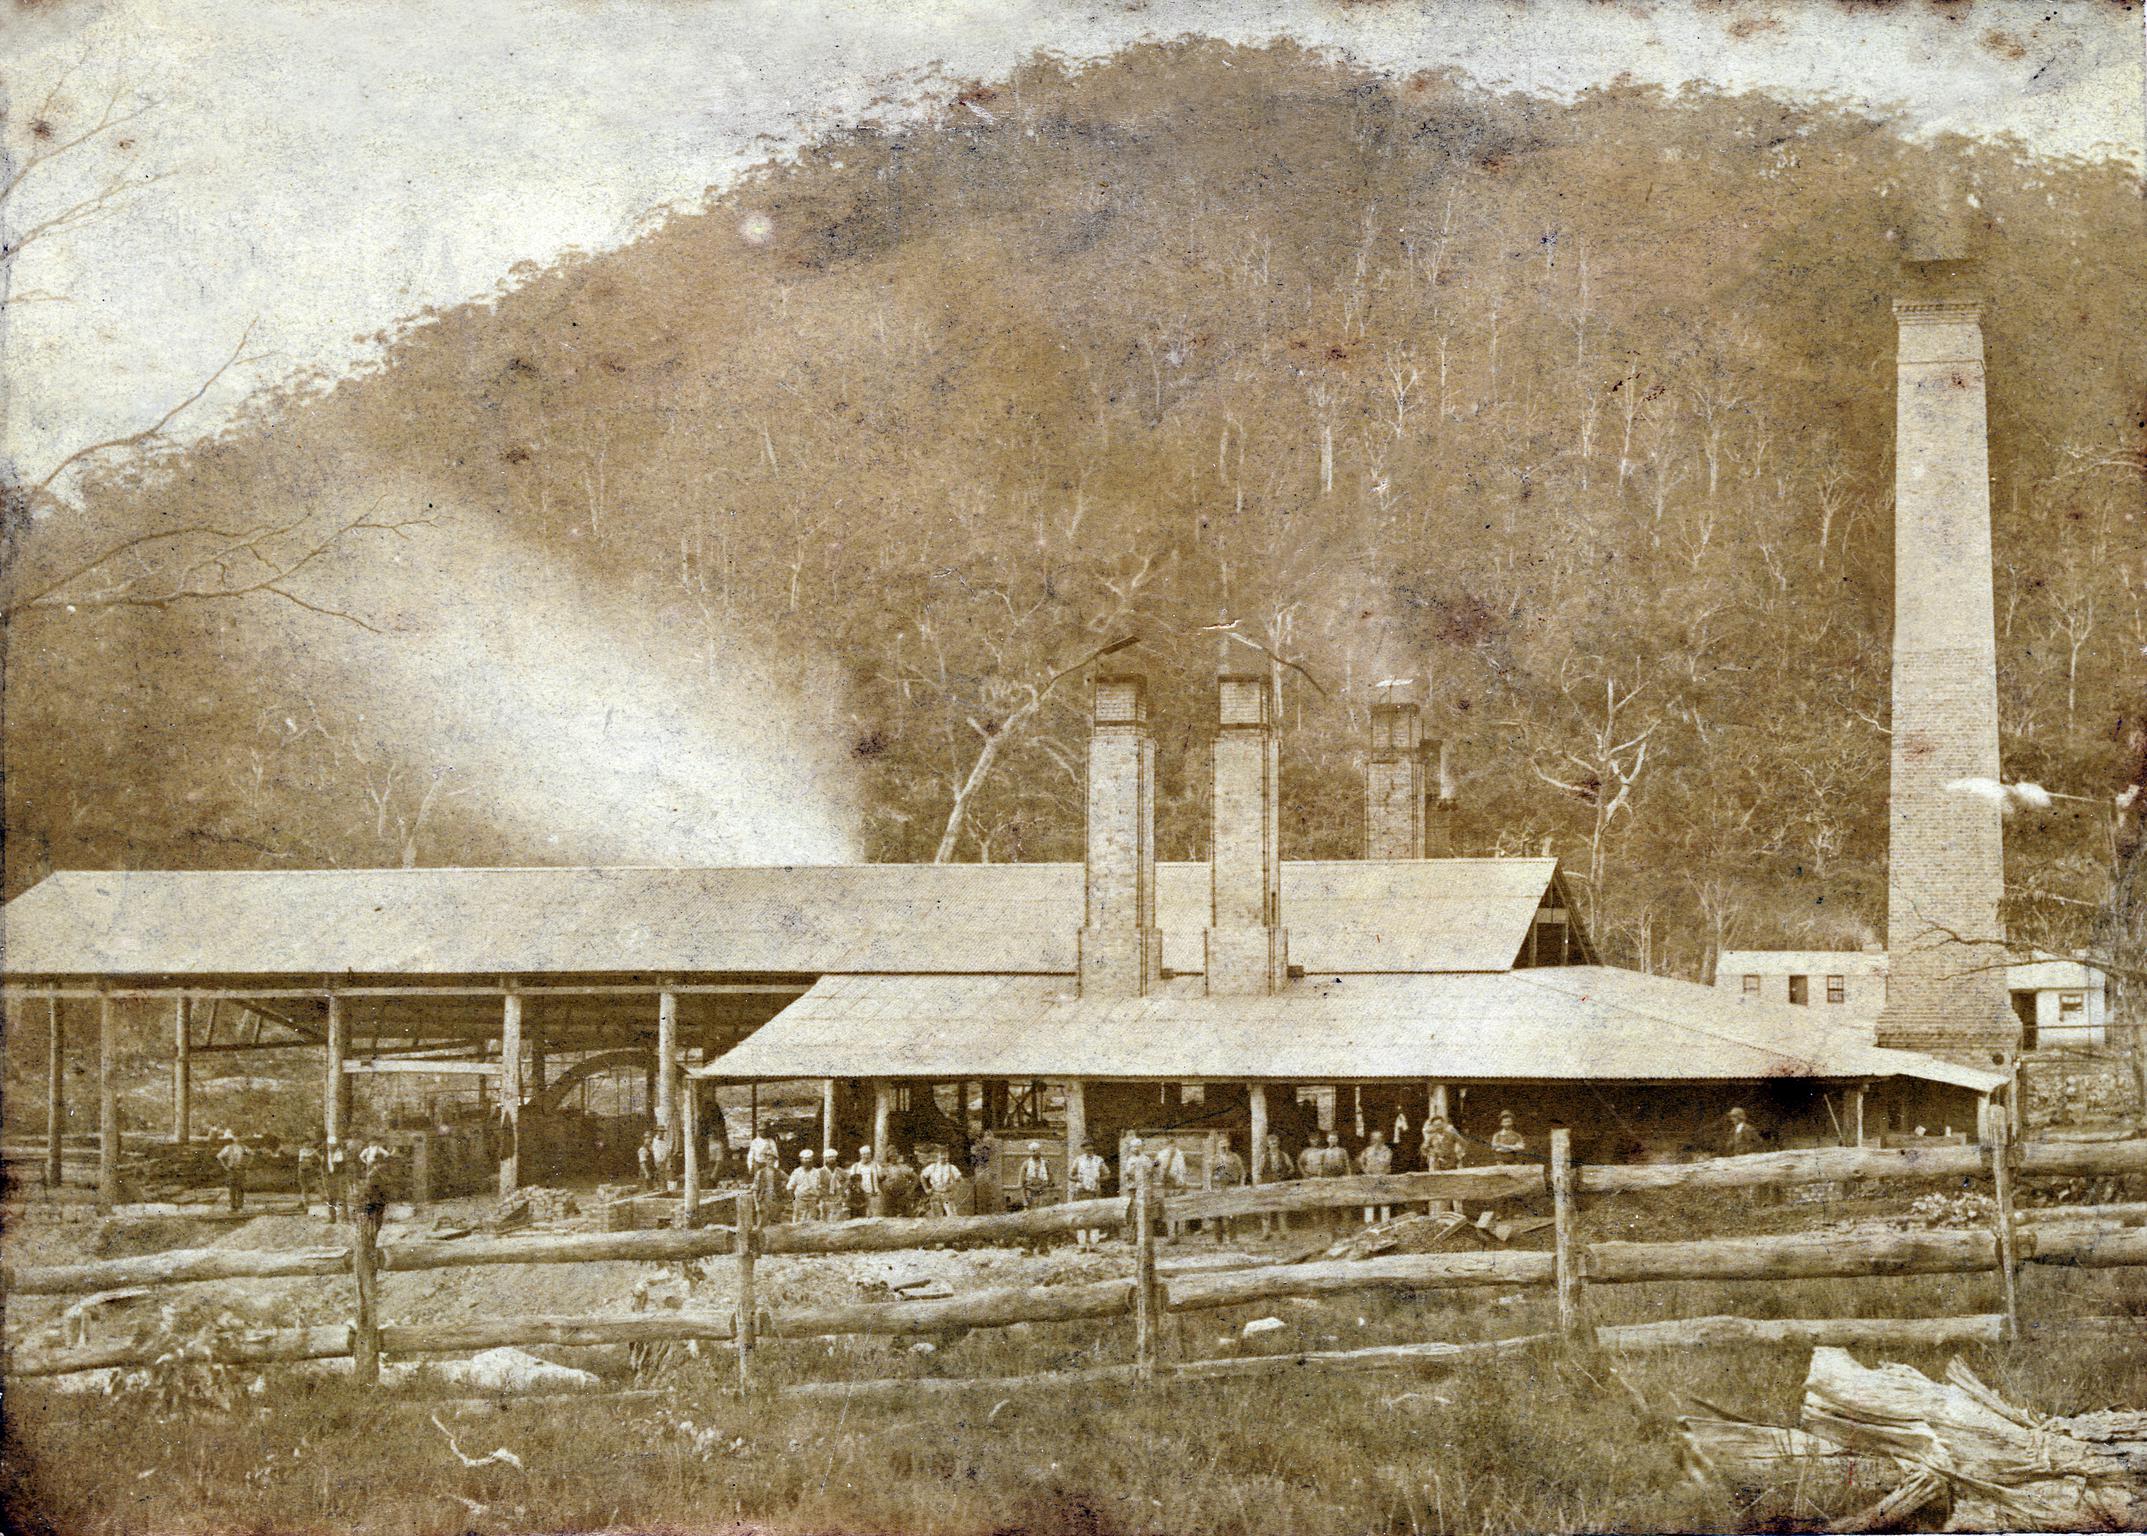 Ohio/Penn iron forge c.1870s, photograph